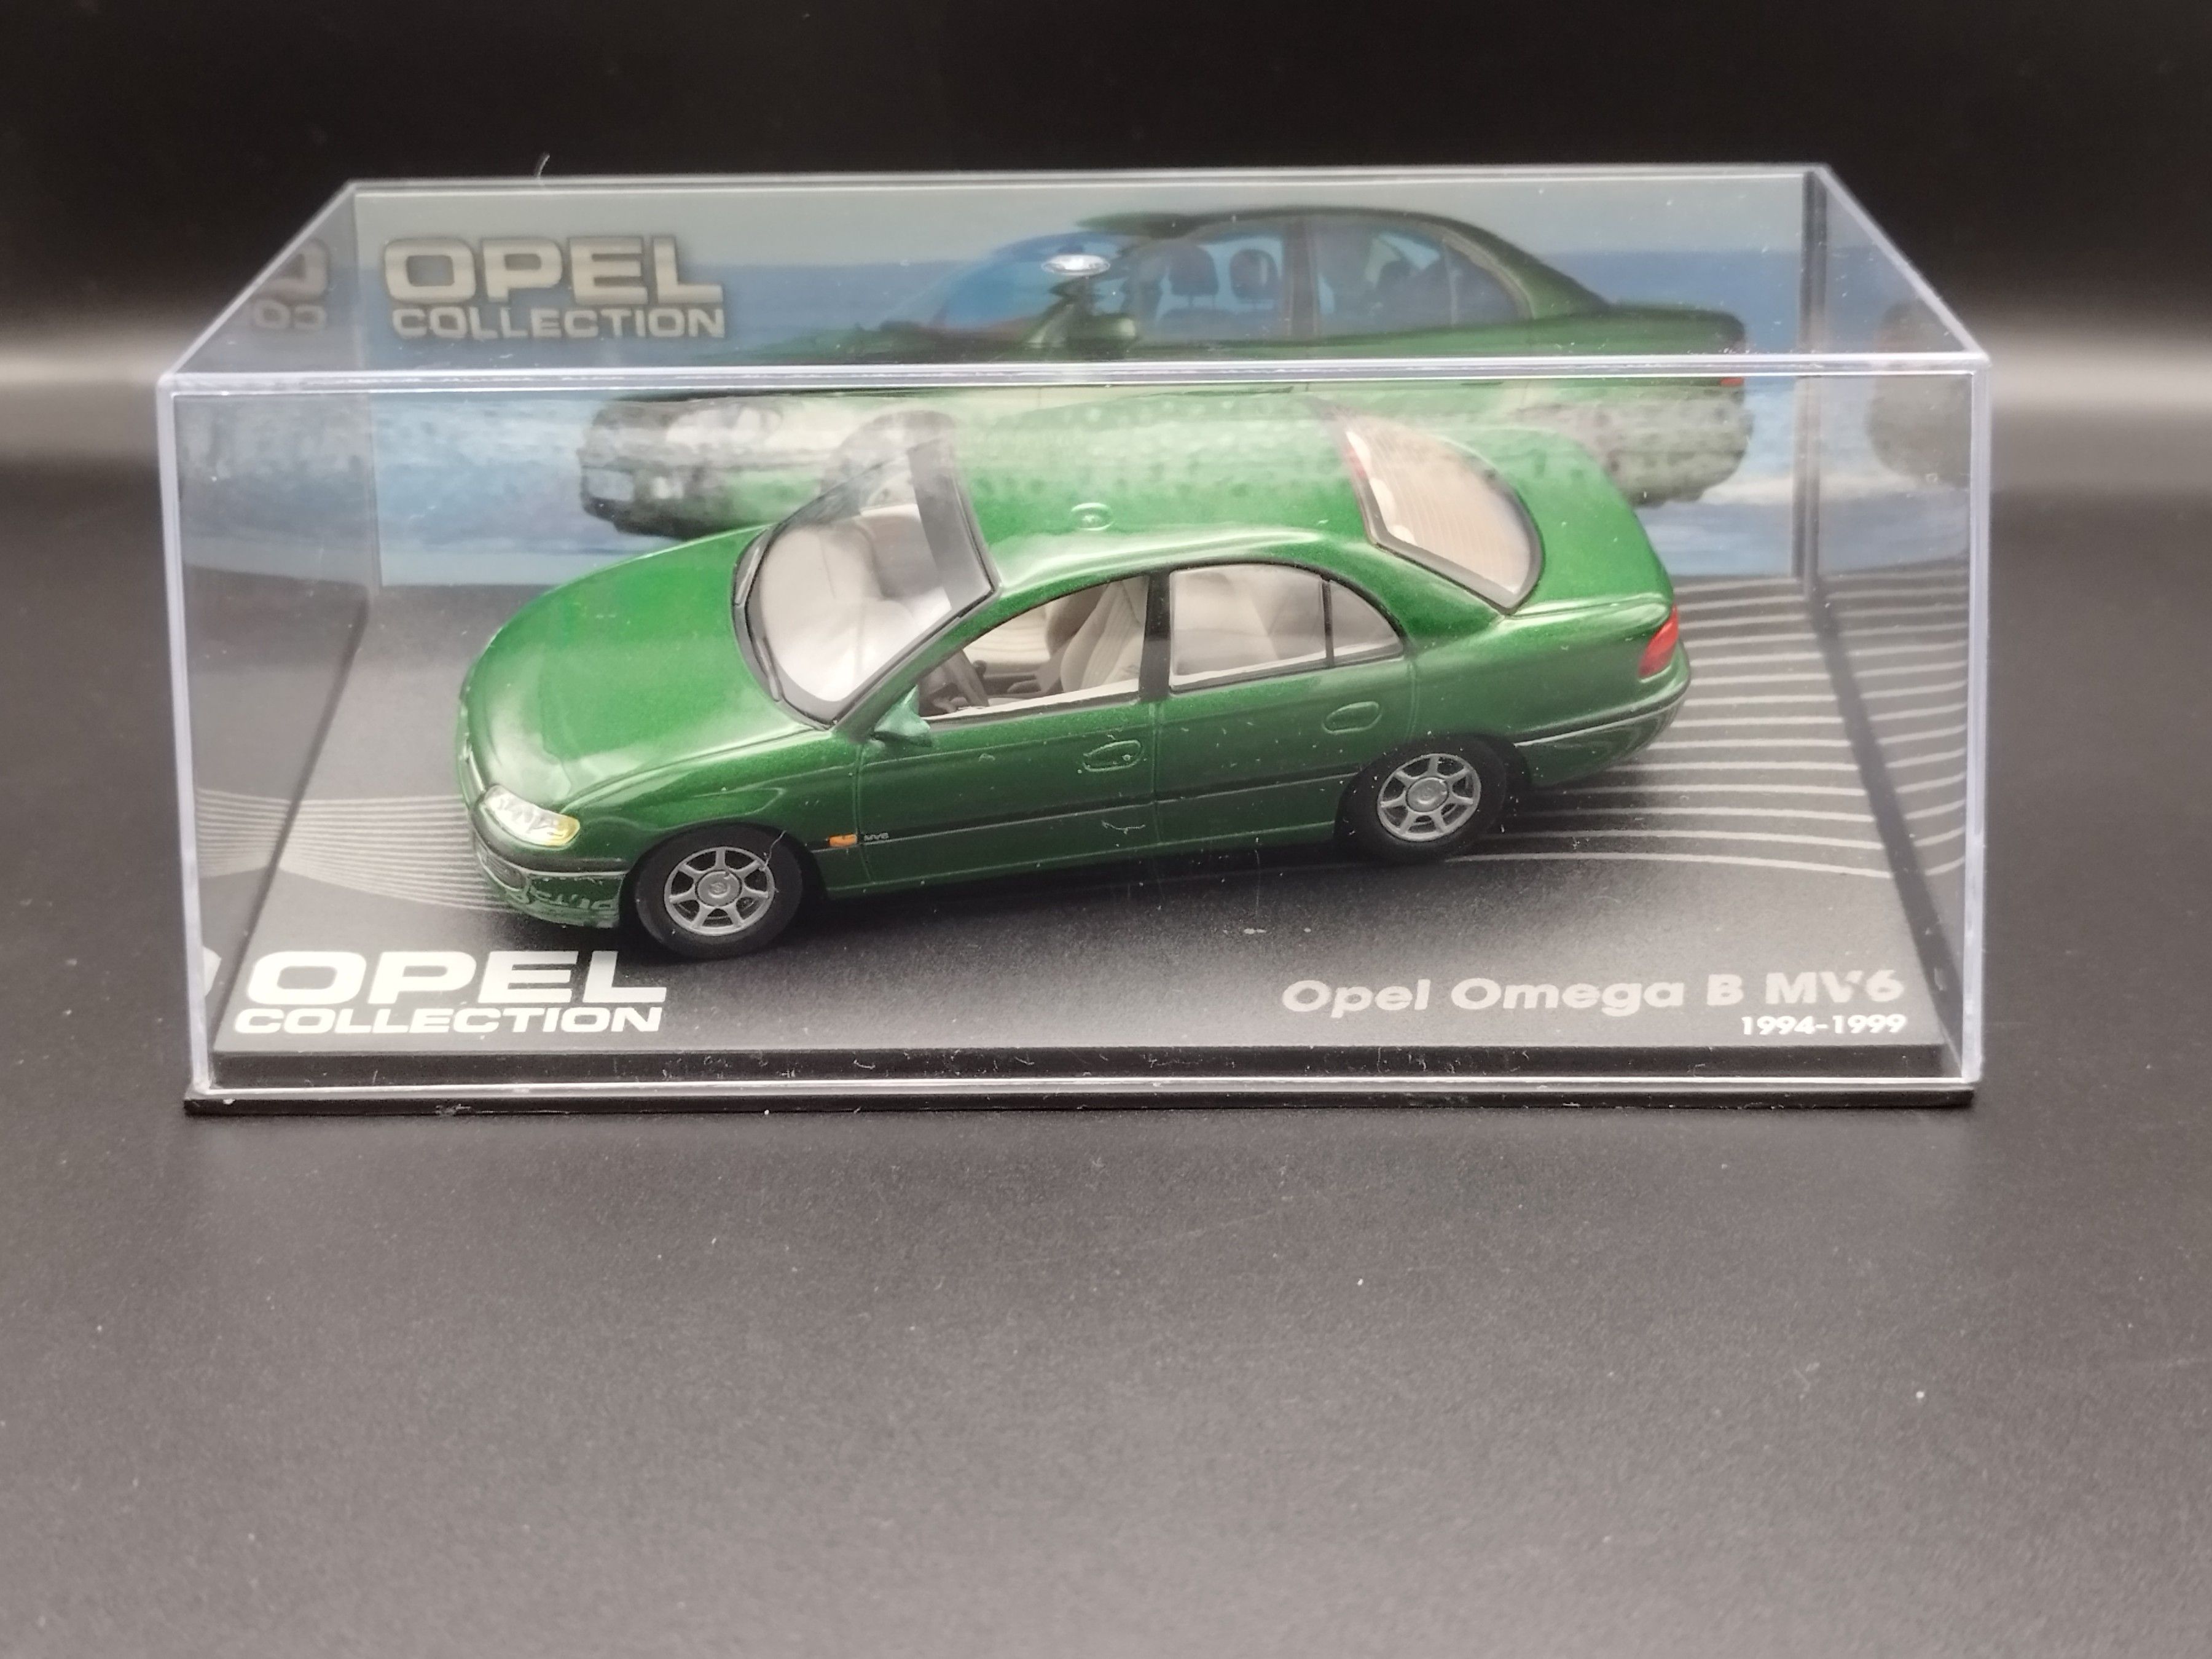 1:43 Opel Collection Omega B MV6 model używany